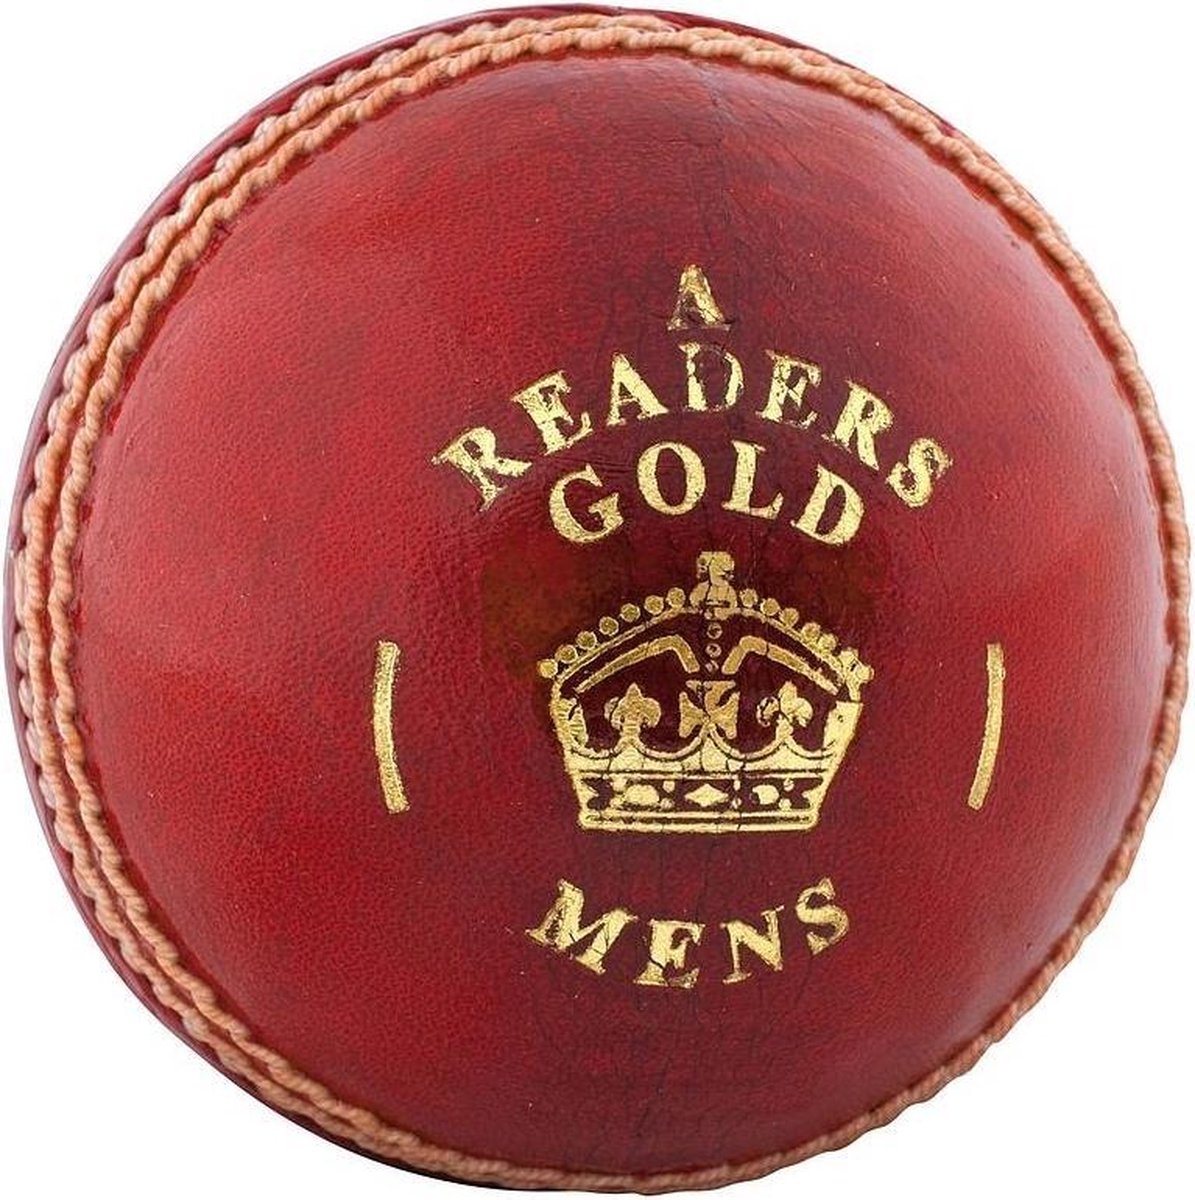 Readers Cricketbal Gold A Heren 22,5 Cm Leer Rood